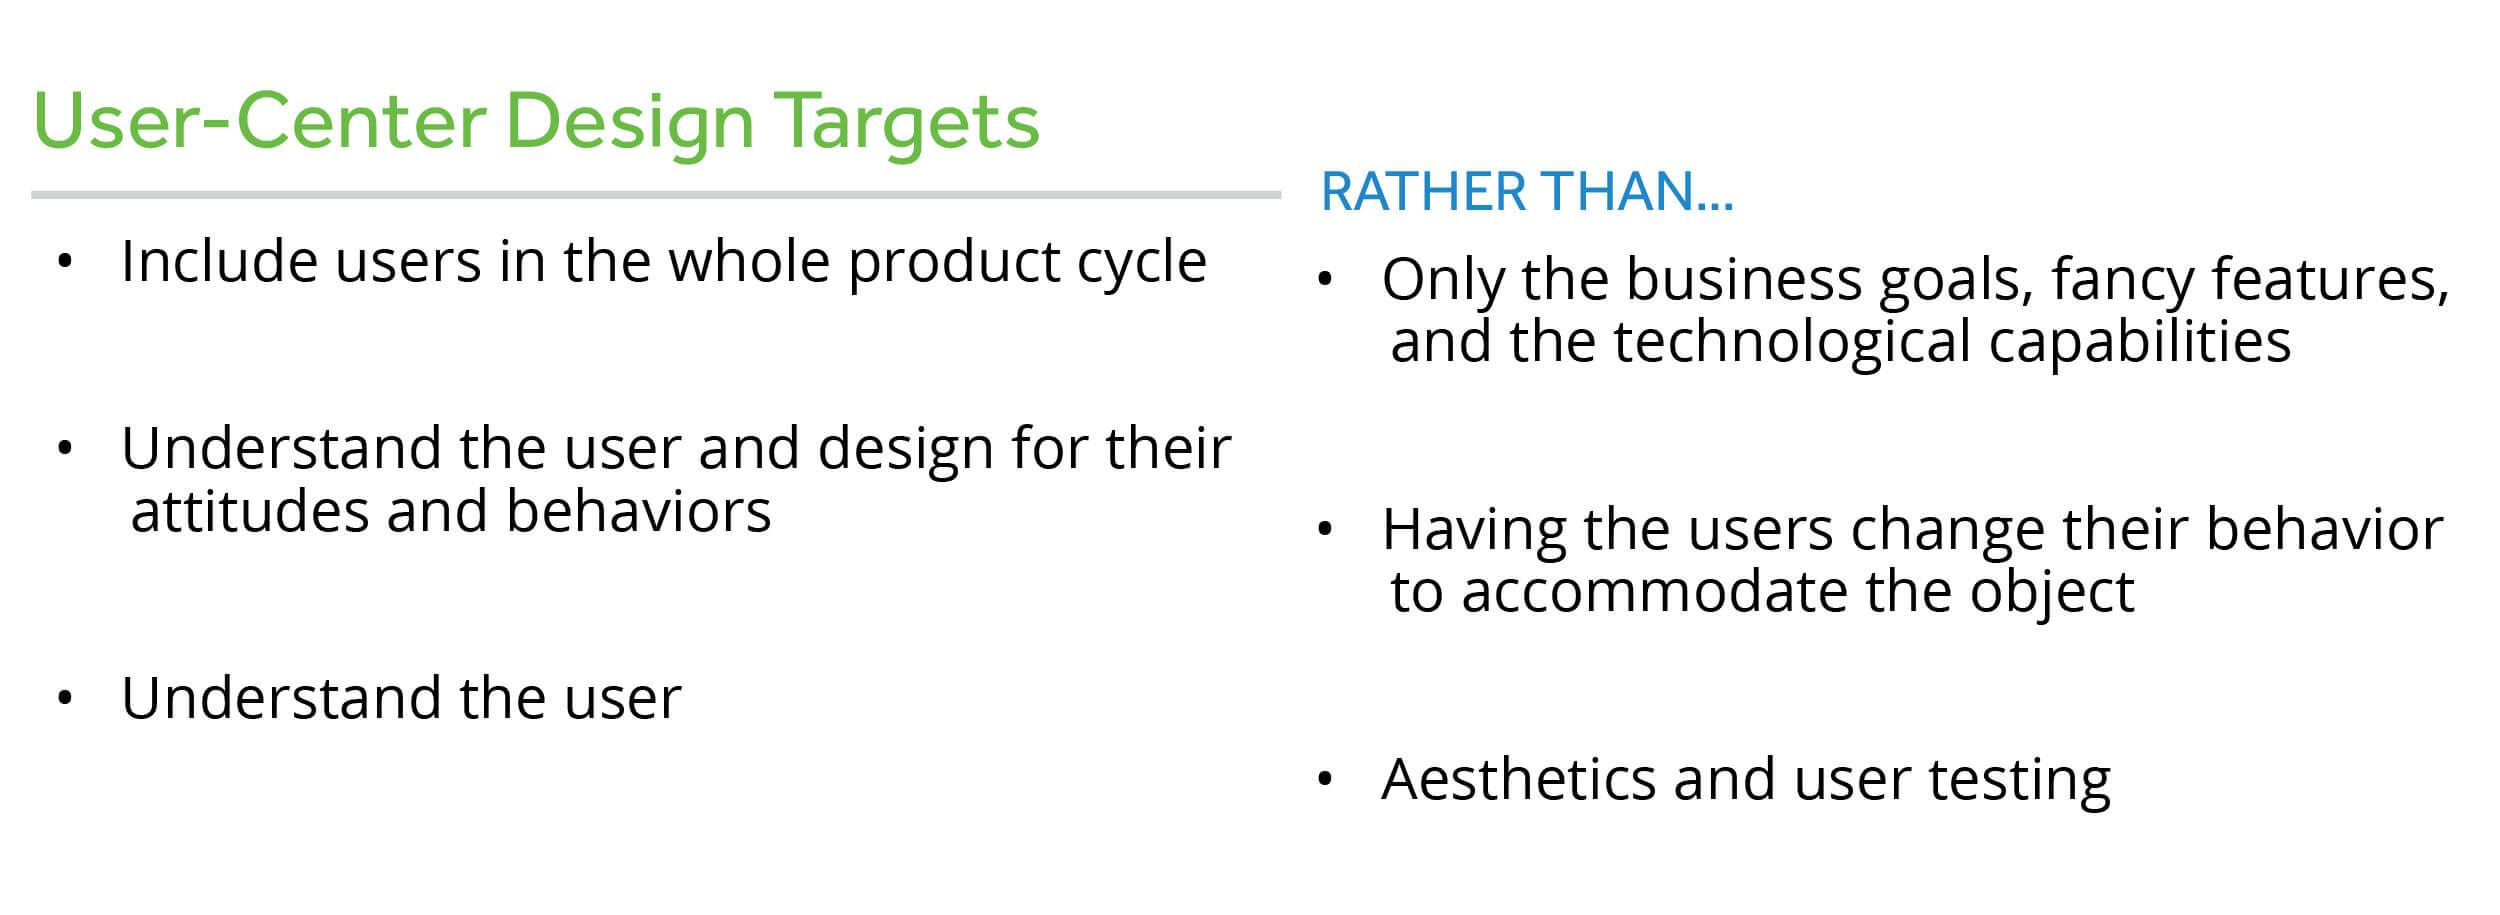 User-center design targets